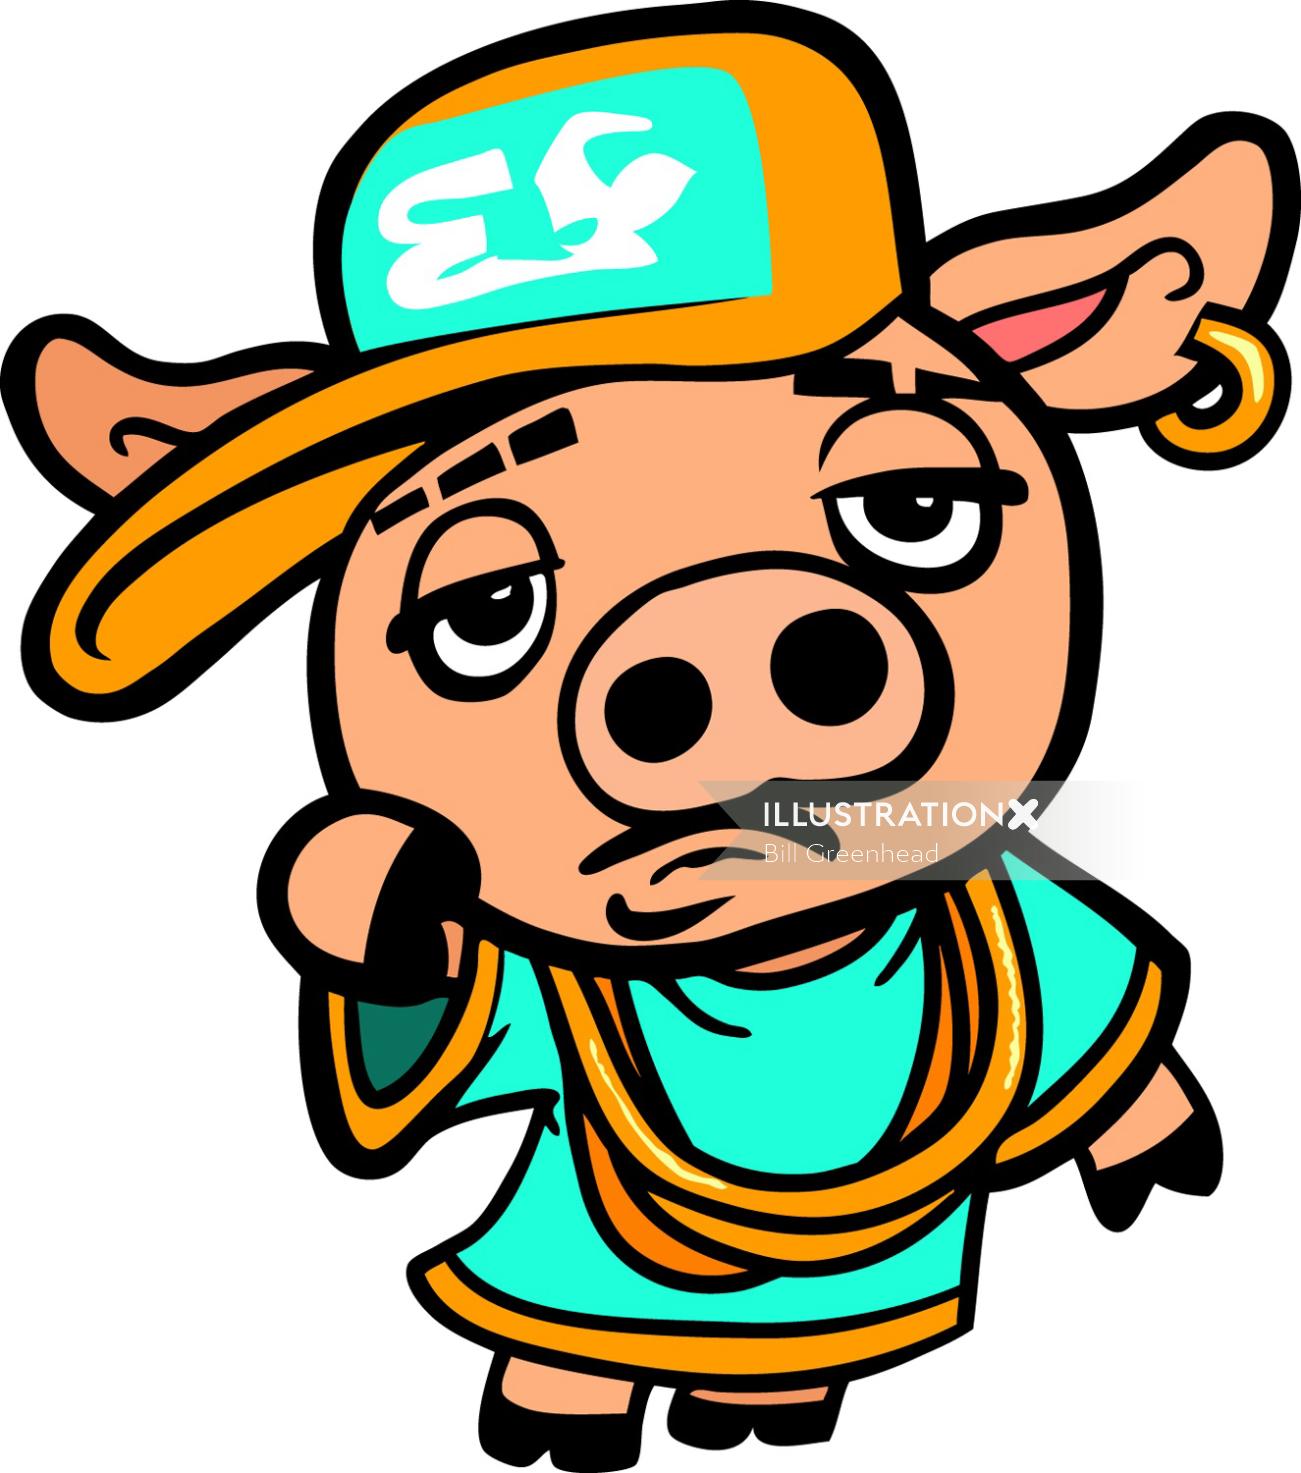 Ghetto pig graphic illustration